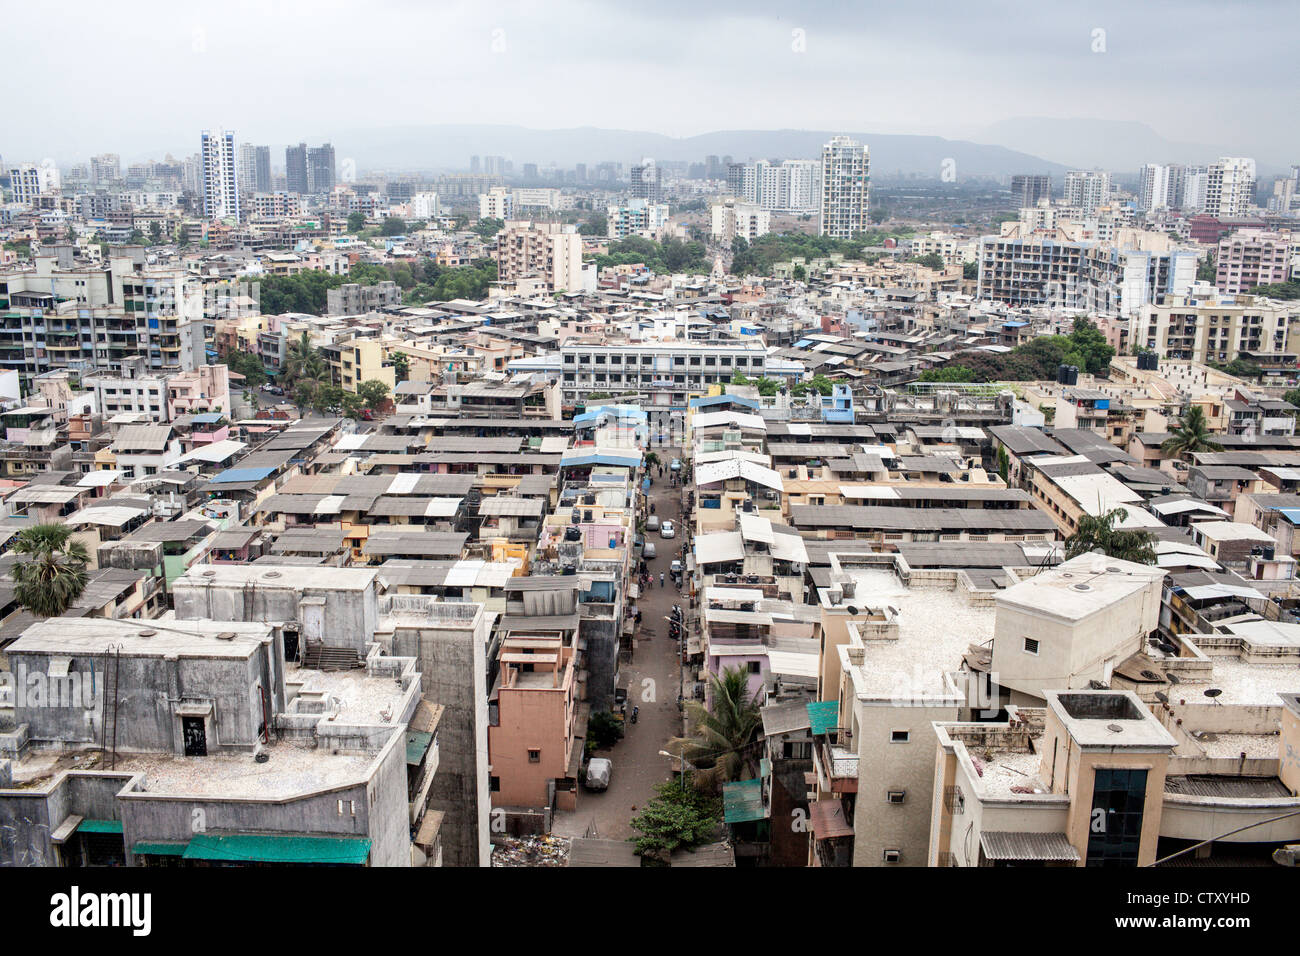 Navi Mumbai continues to grow increasingly fast. New buildings are